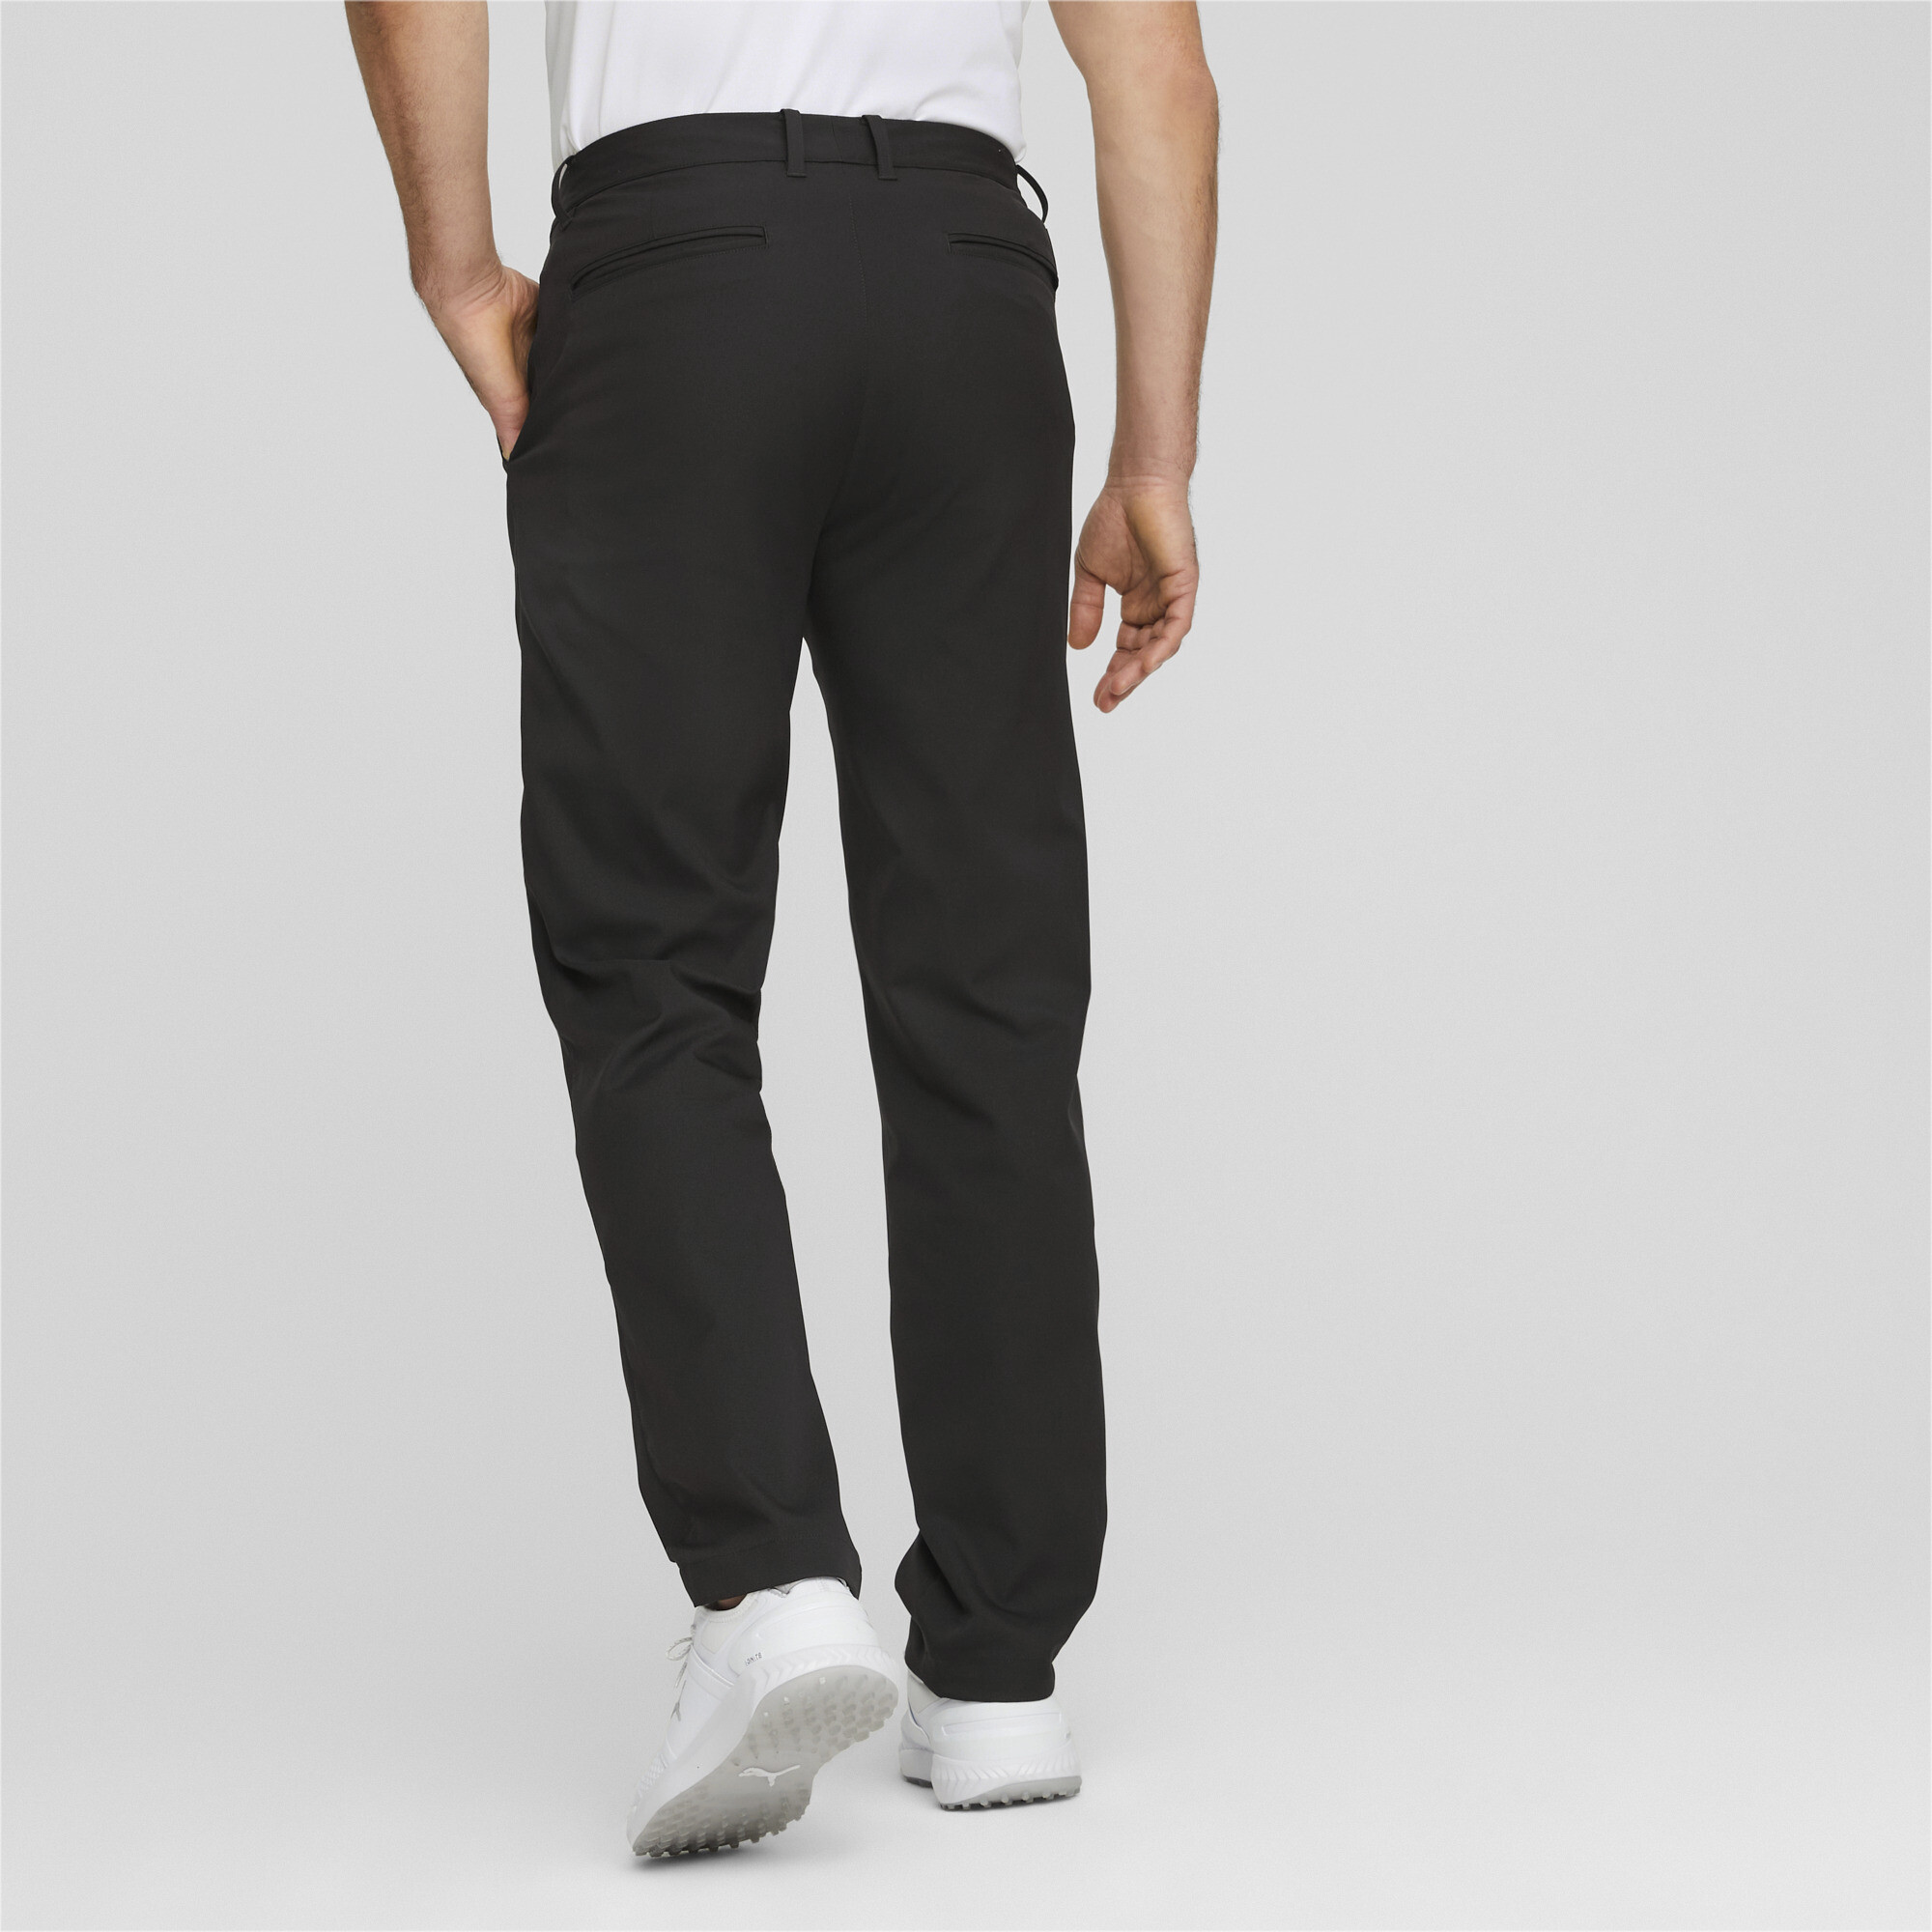 Men's Puma Dealer Golf Pants, Black, Size 34/32, Clothing